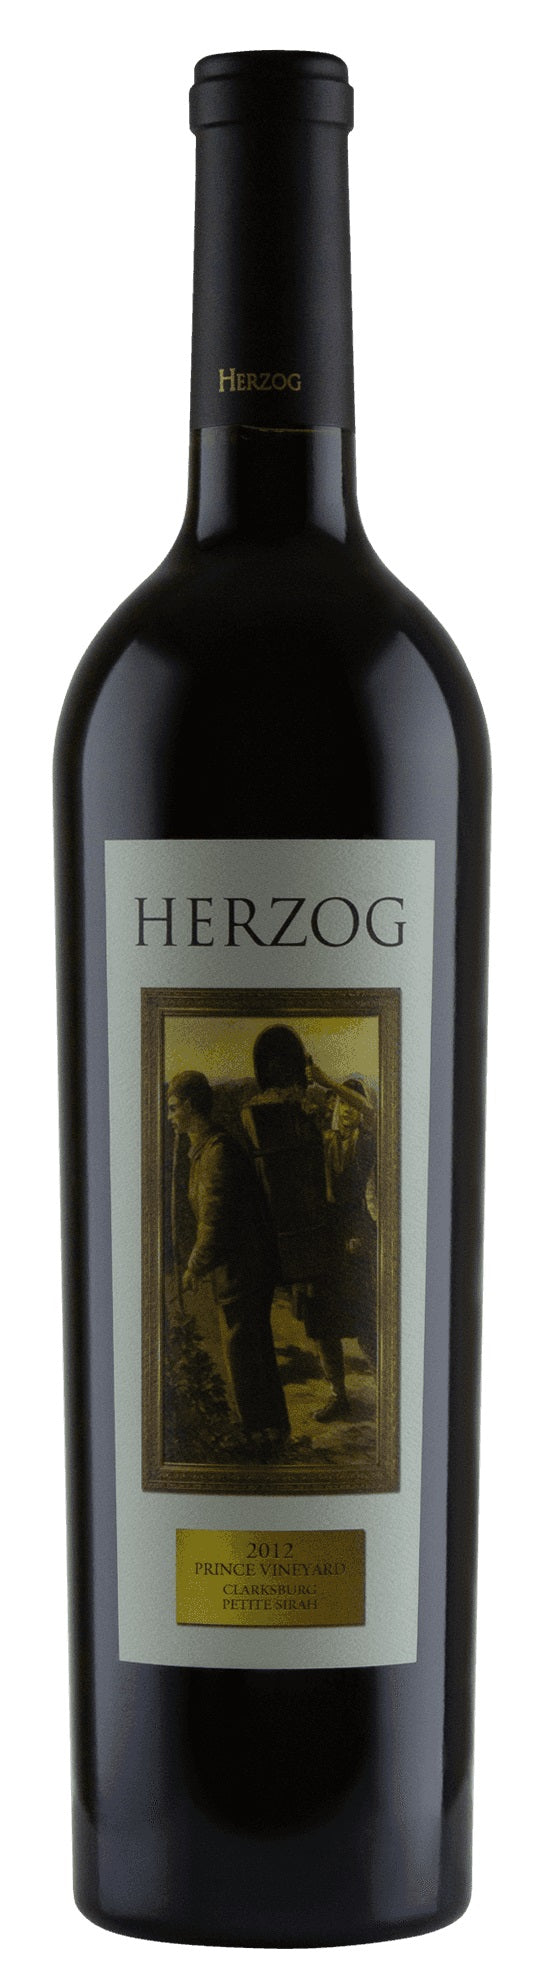 HERZOG WINERY SPECIAL  PETITE SIRAH PRINCE VINEYARD HERZOG 750 ML